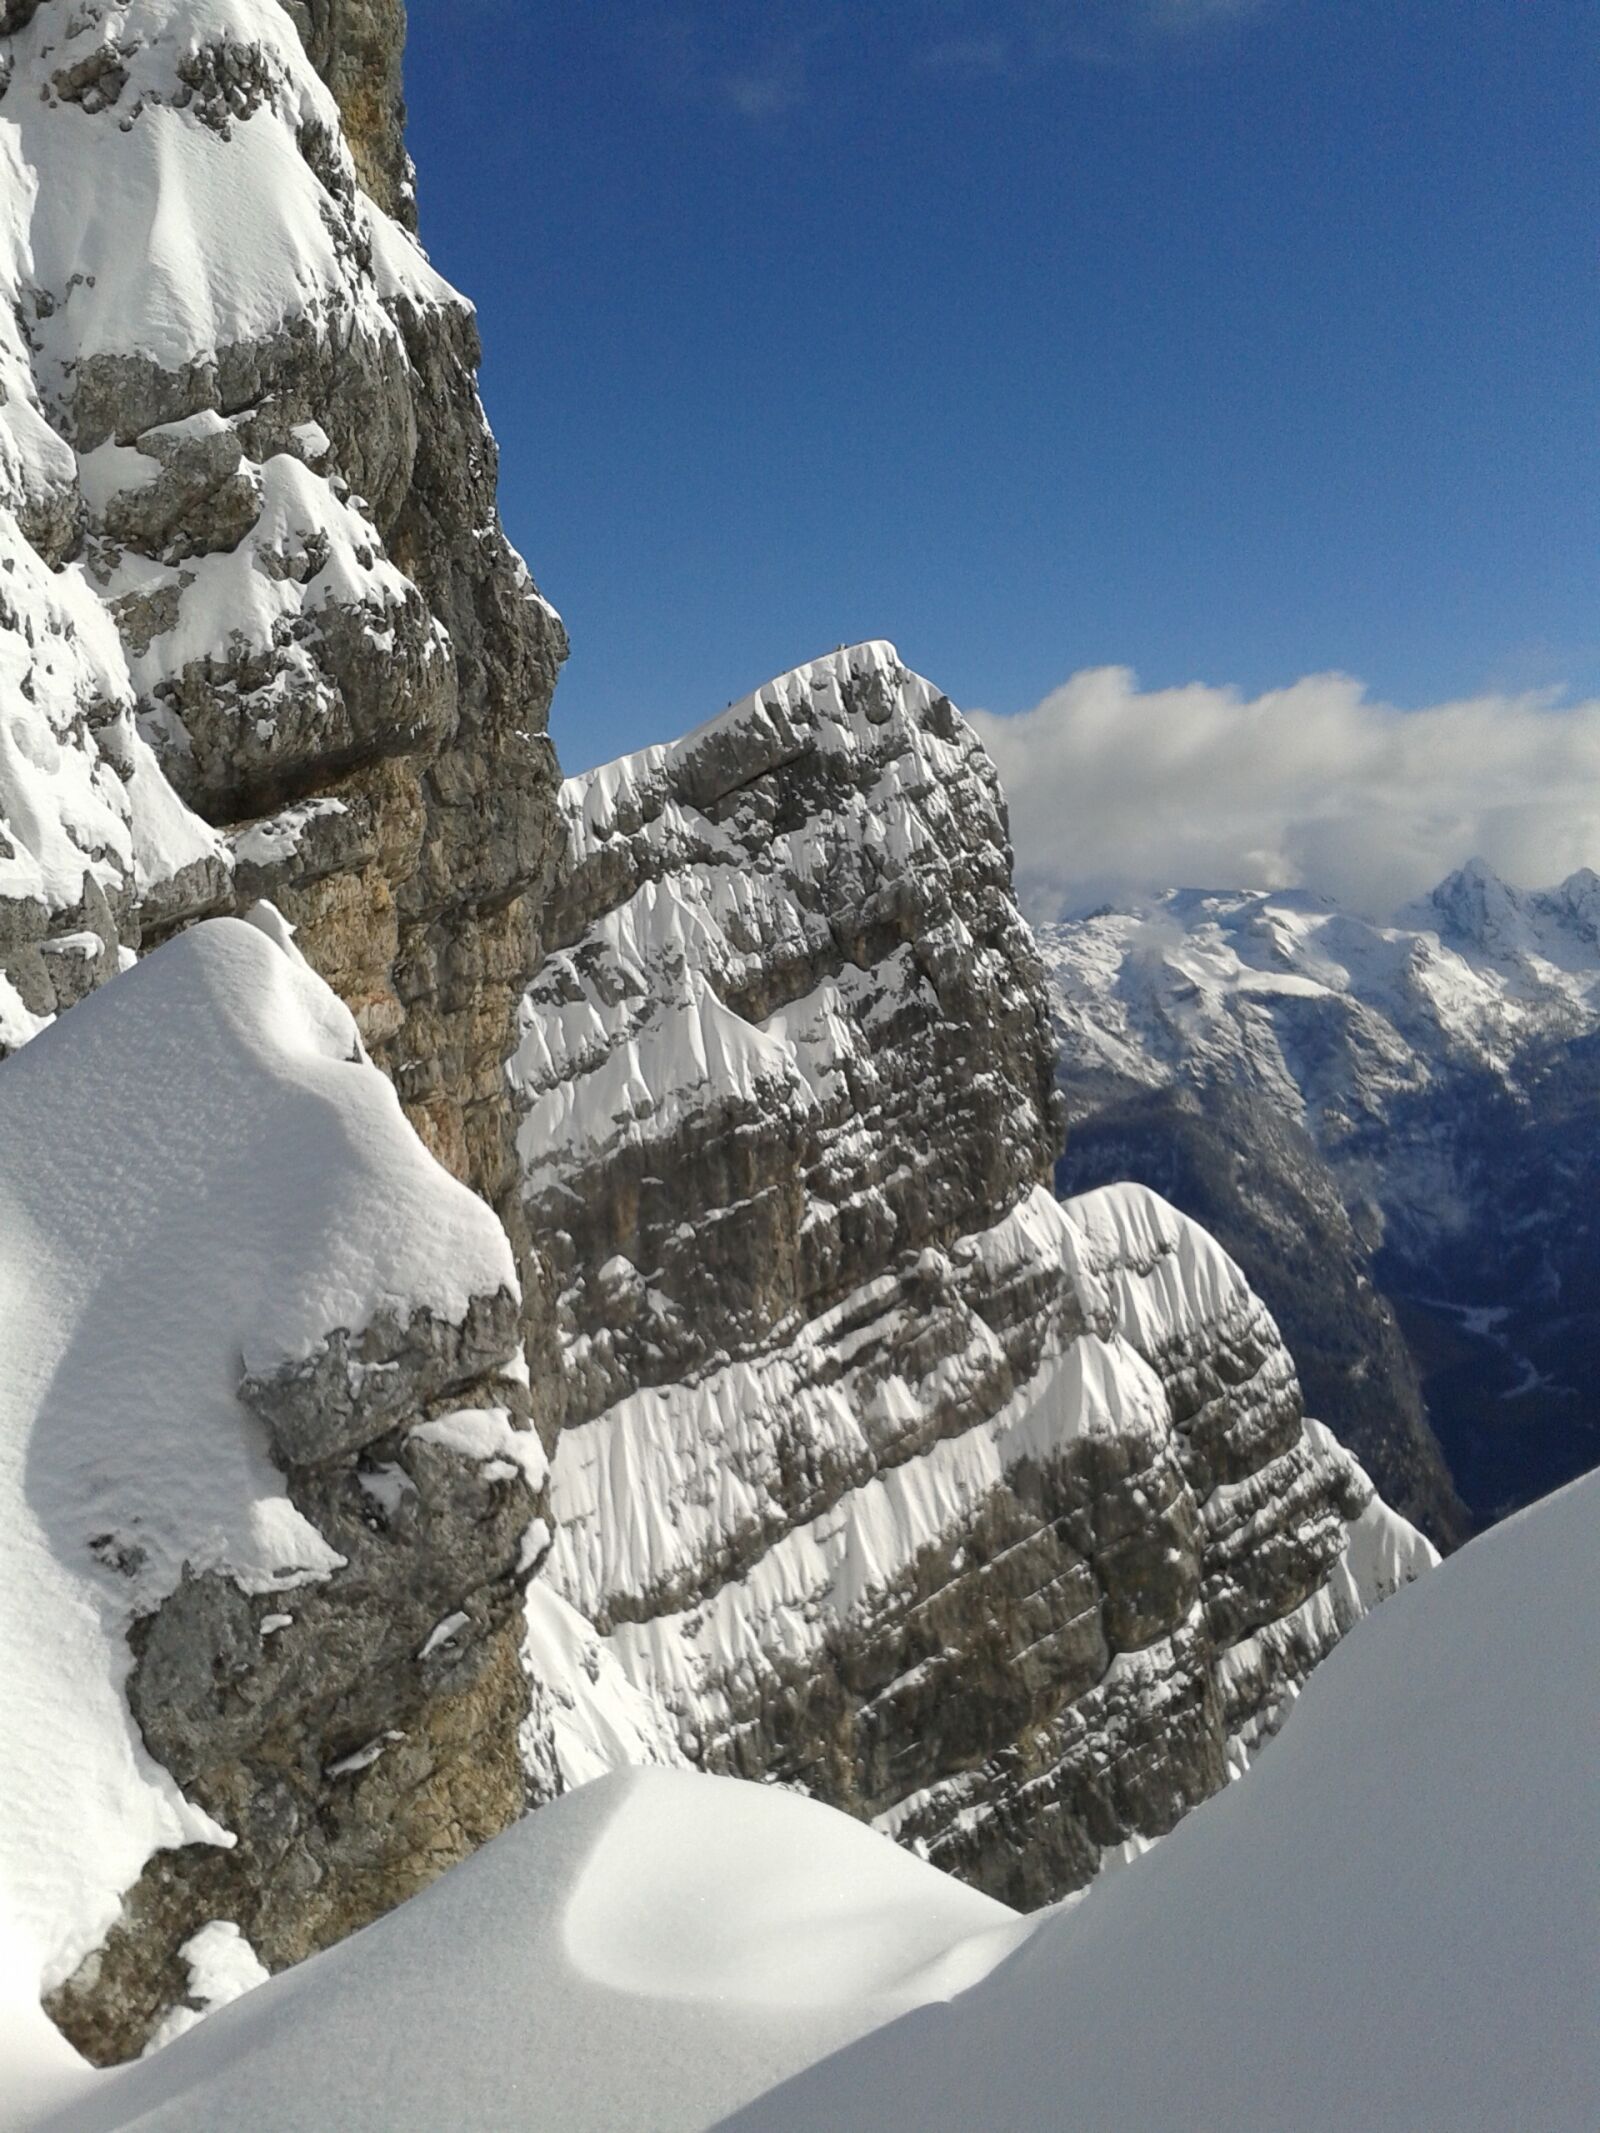 Samsung Galaxy S3 Mini sample photo. Alpine, mountains, landscape photography